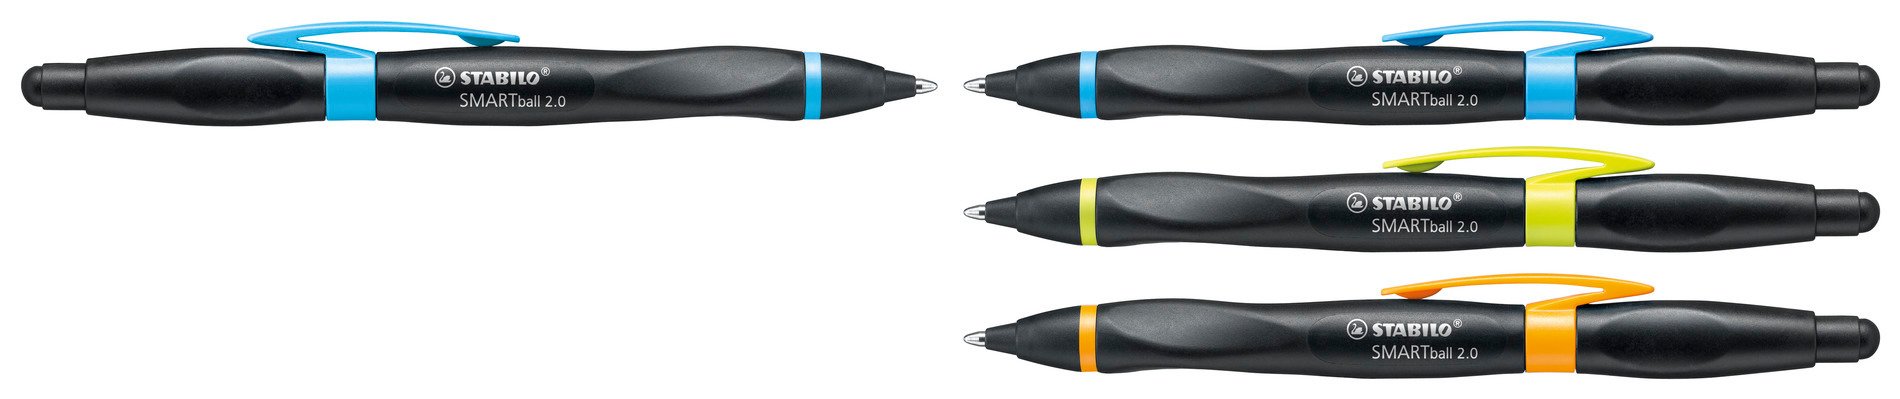 Ergonomischer Kugelschreiber STABILO SMARTball 2.0